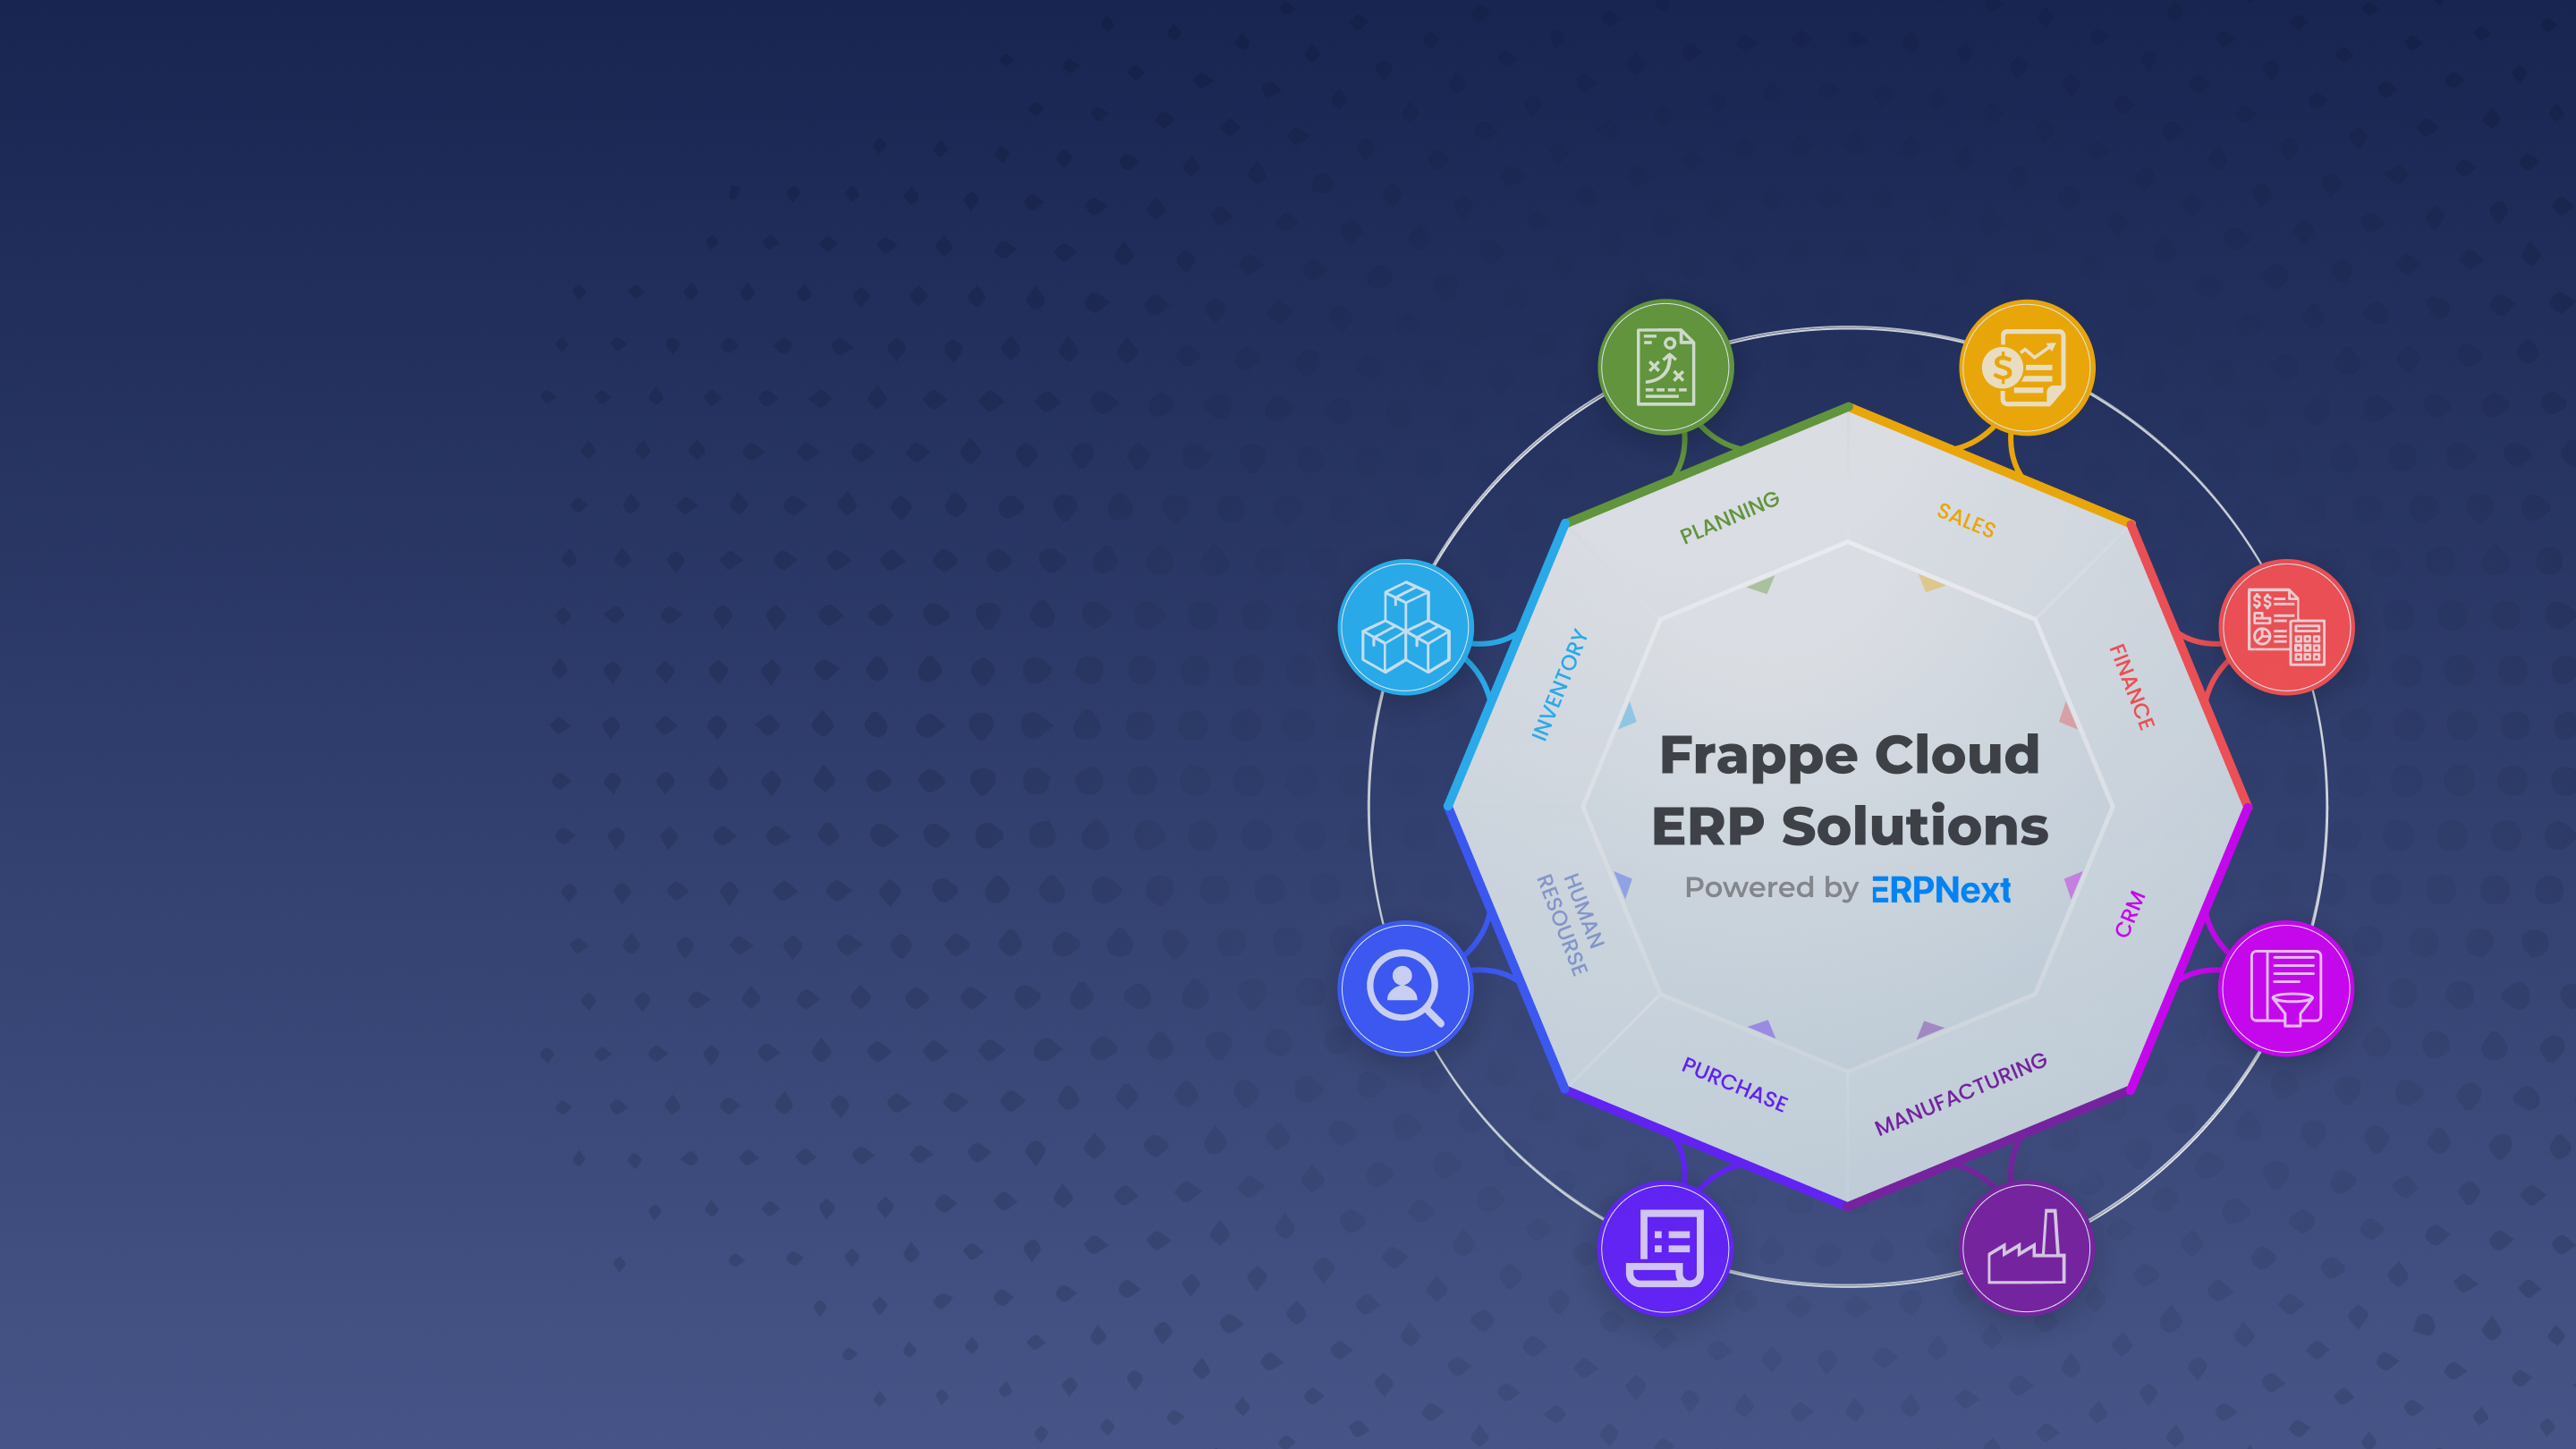 Frappe Cloud ERP Solutions